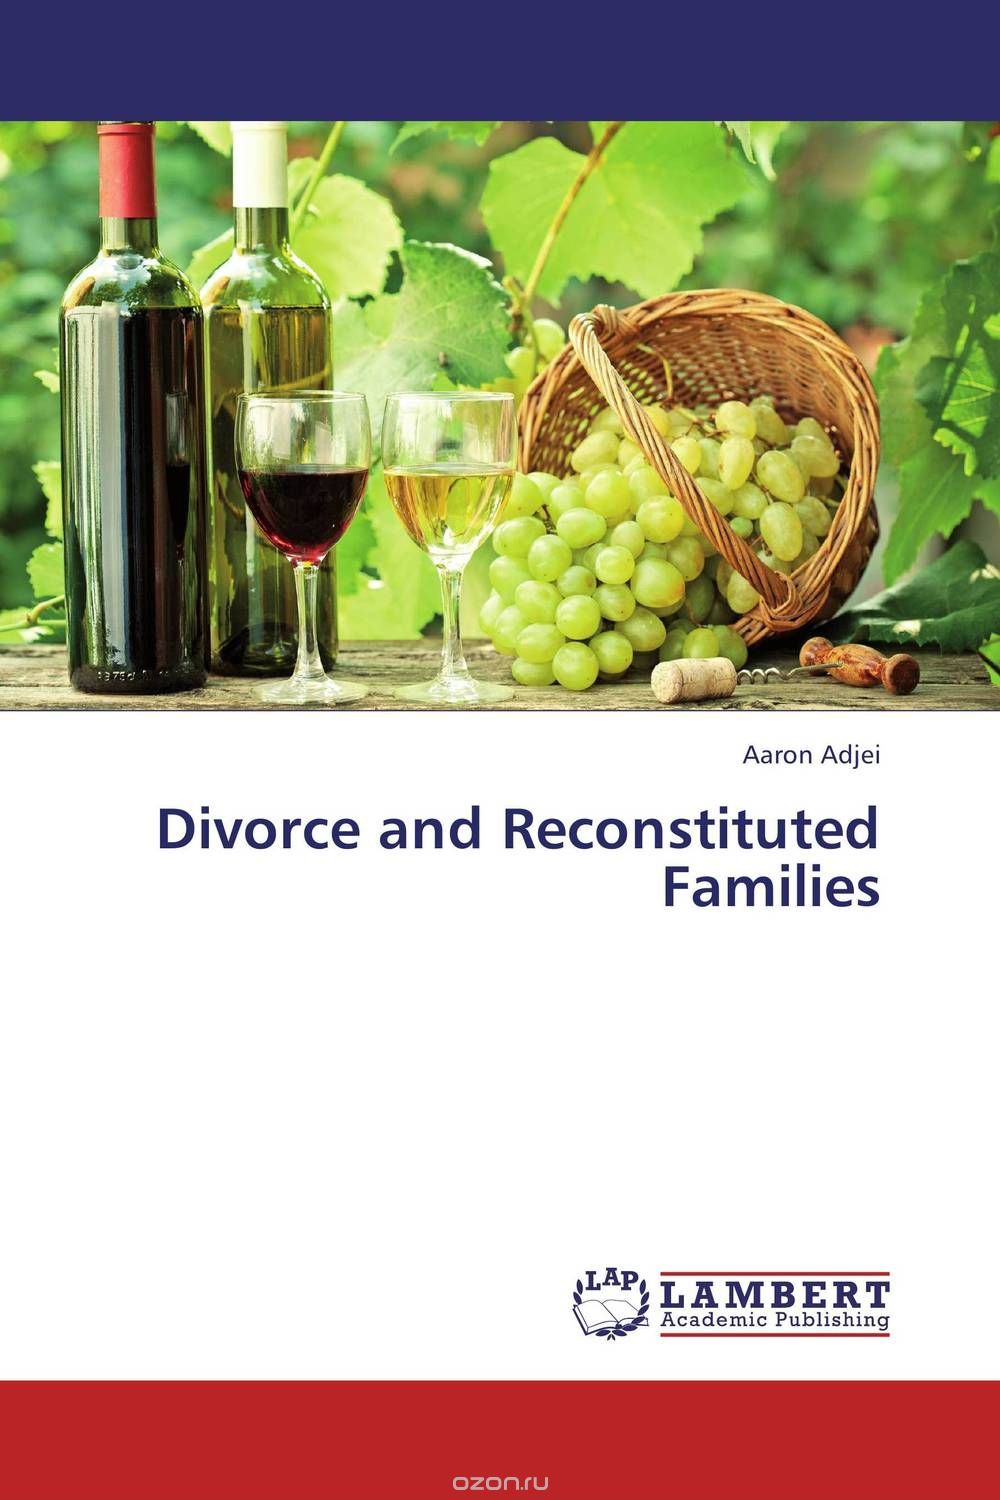 Скачать книгу "Divorce and Reconstituted Families"